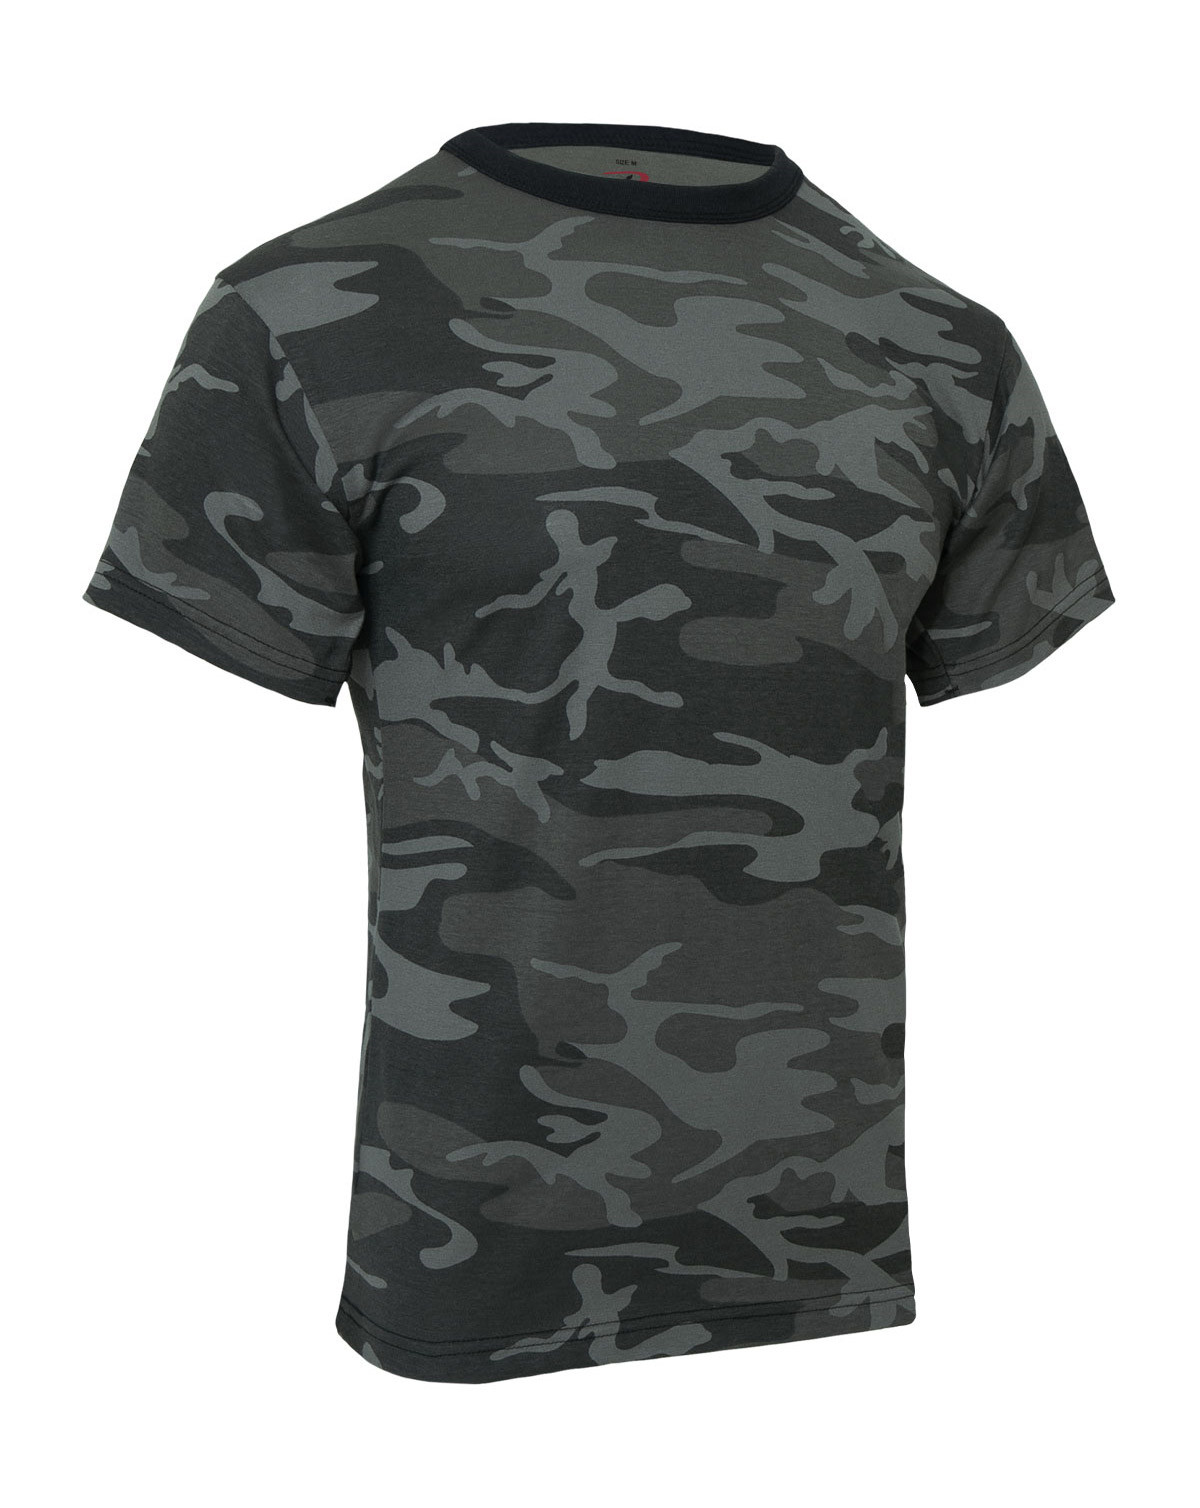 Rothco T-shirt - Mange Camouflager (Black Camo, 3XL)